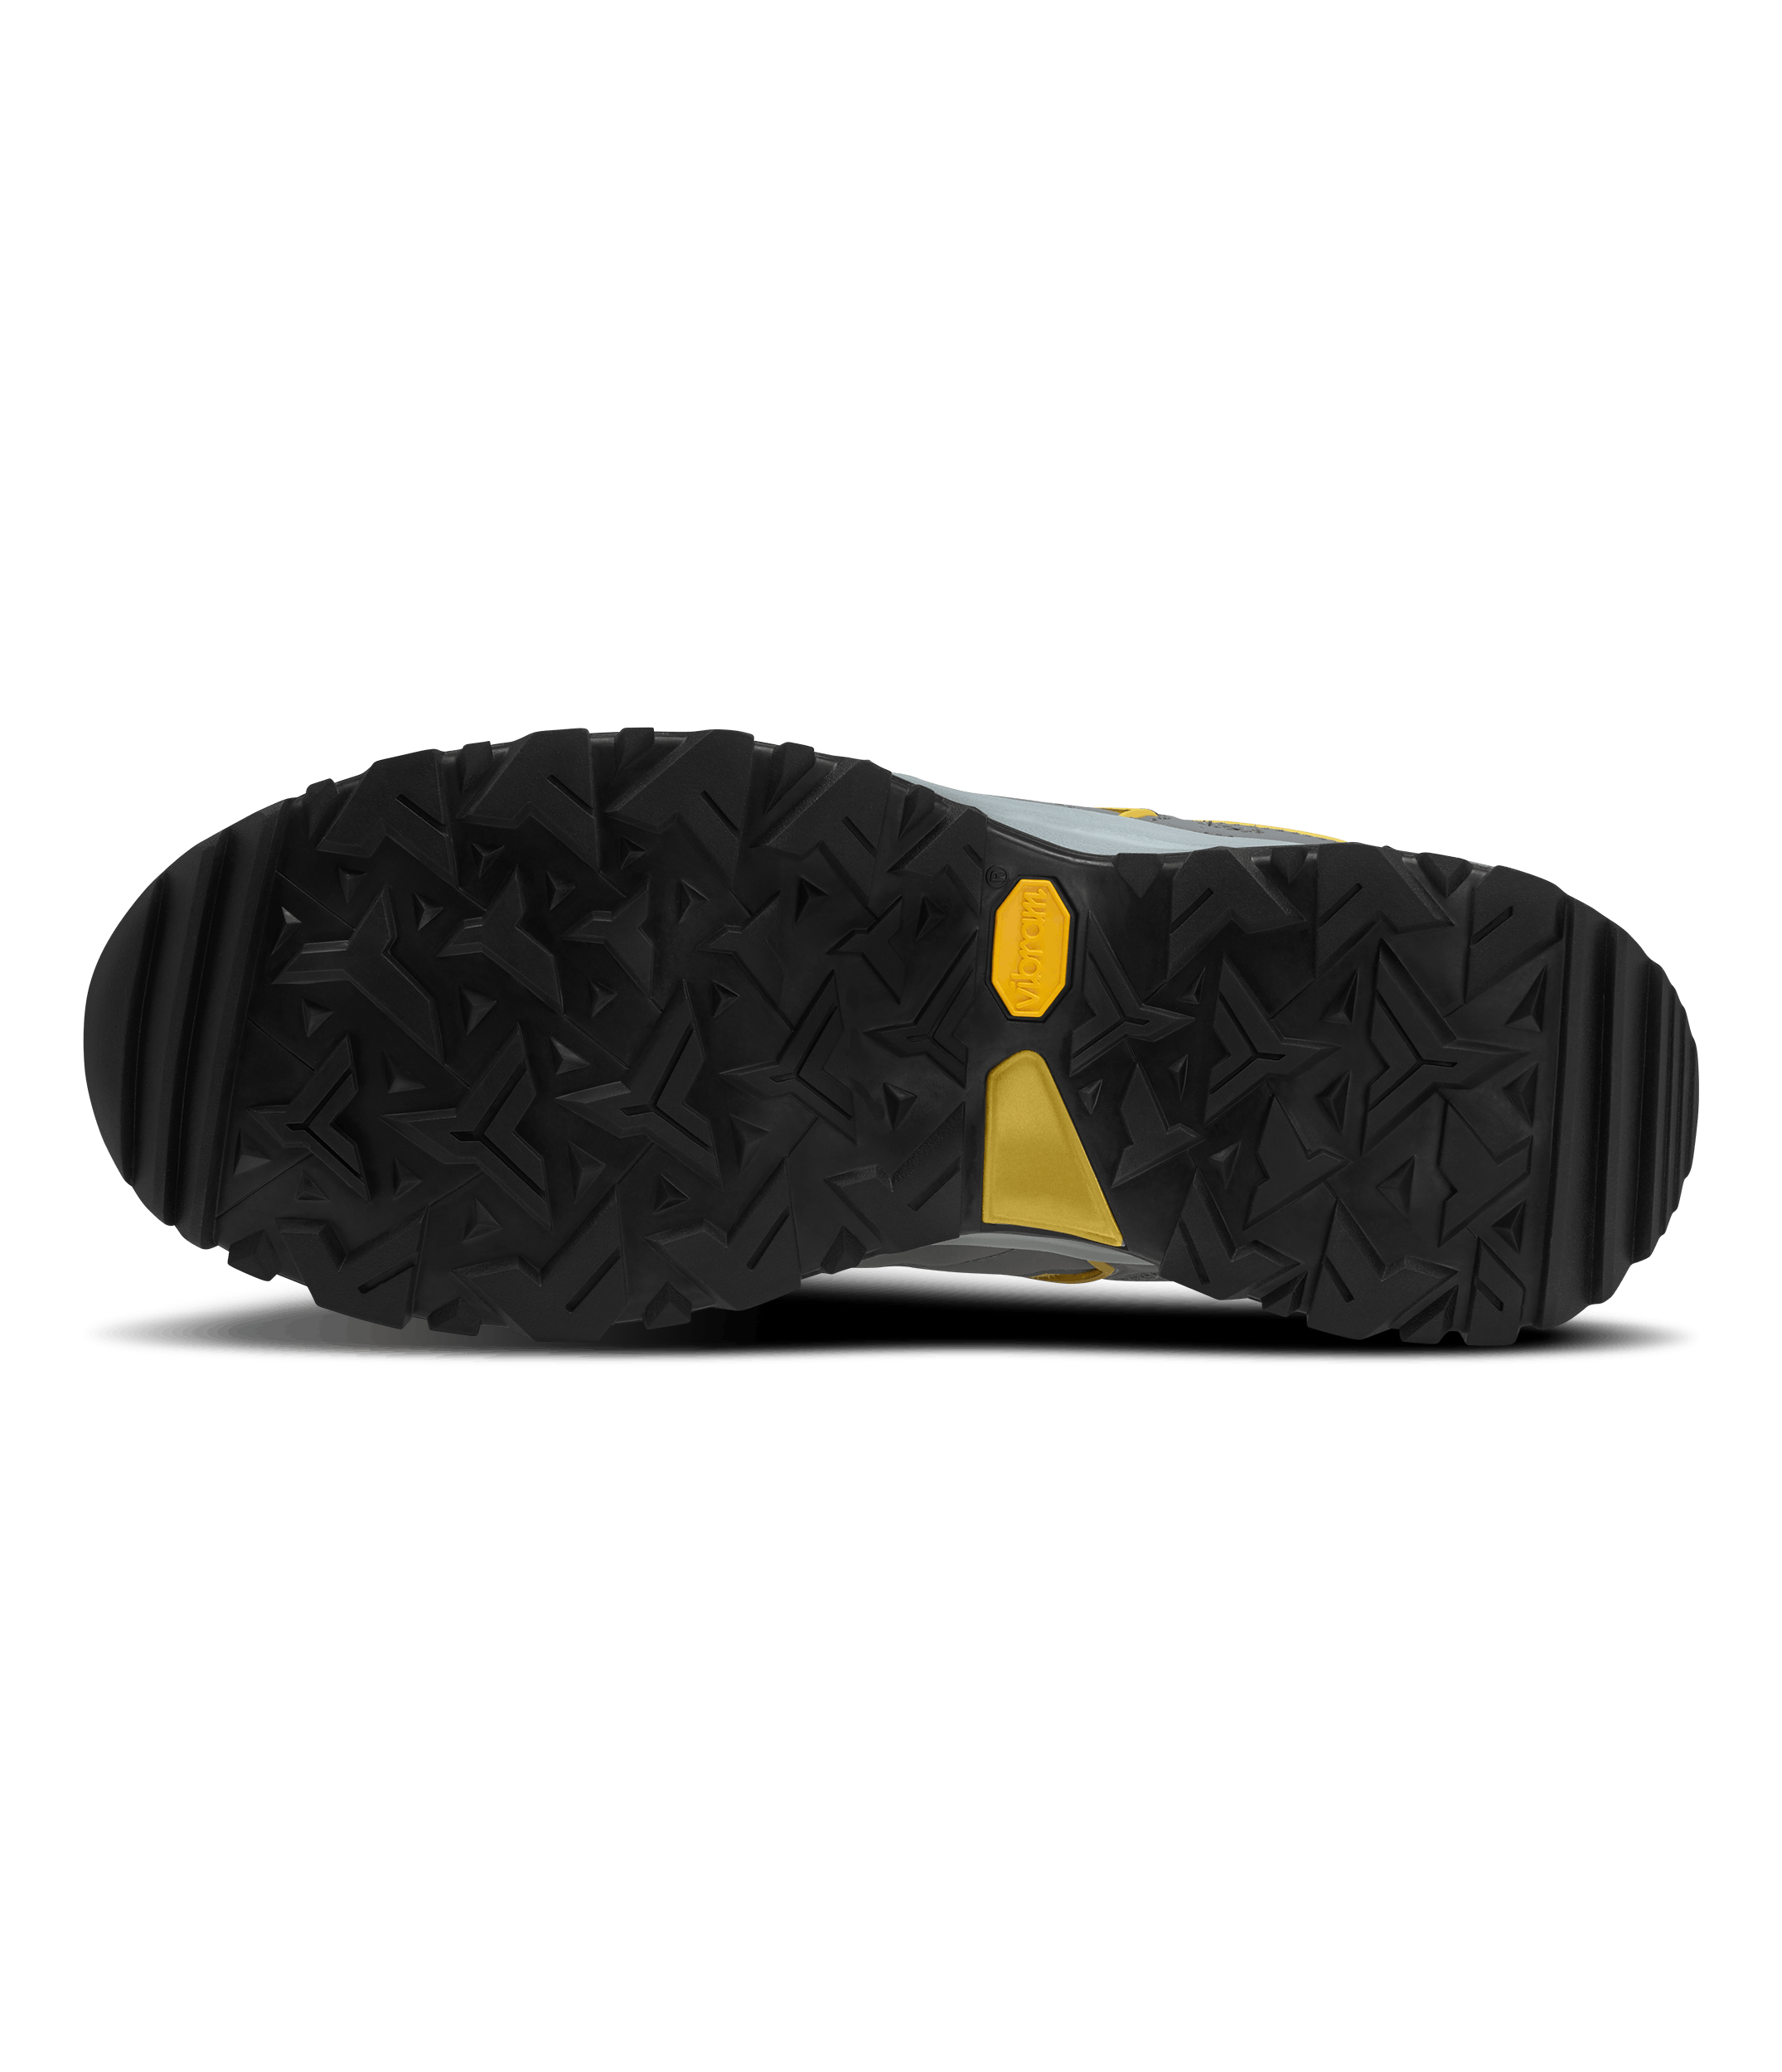 The North Face Men's Hedgehog Fastpack II Mid Waterproof Shoes